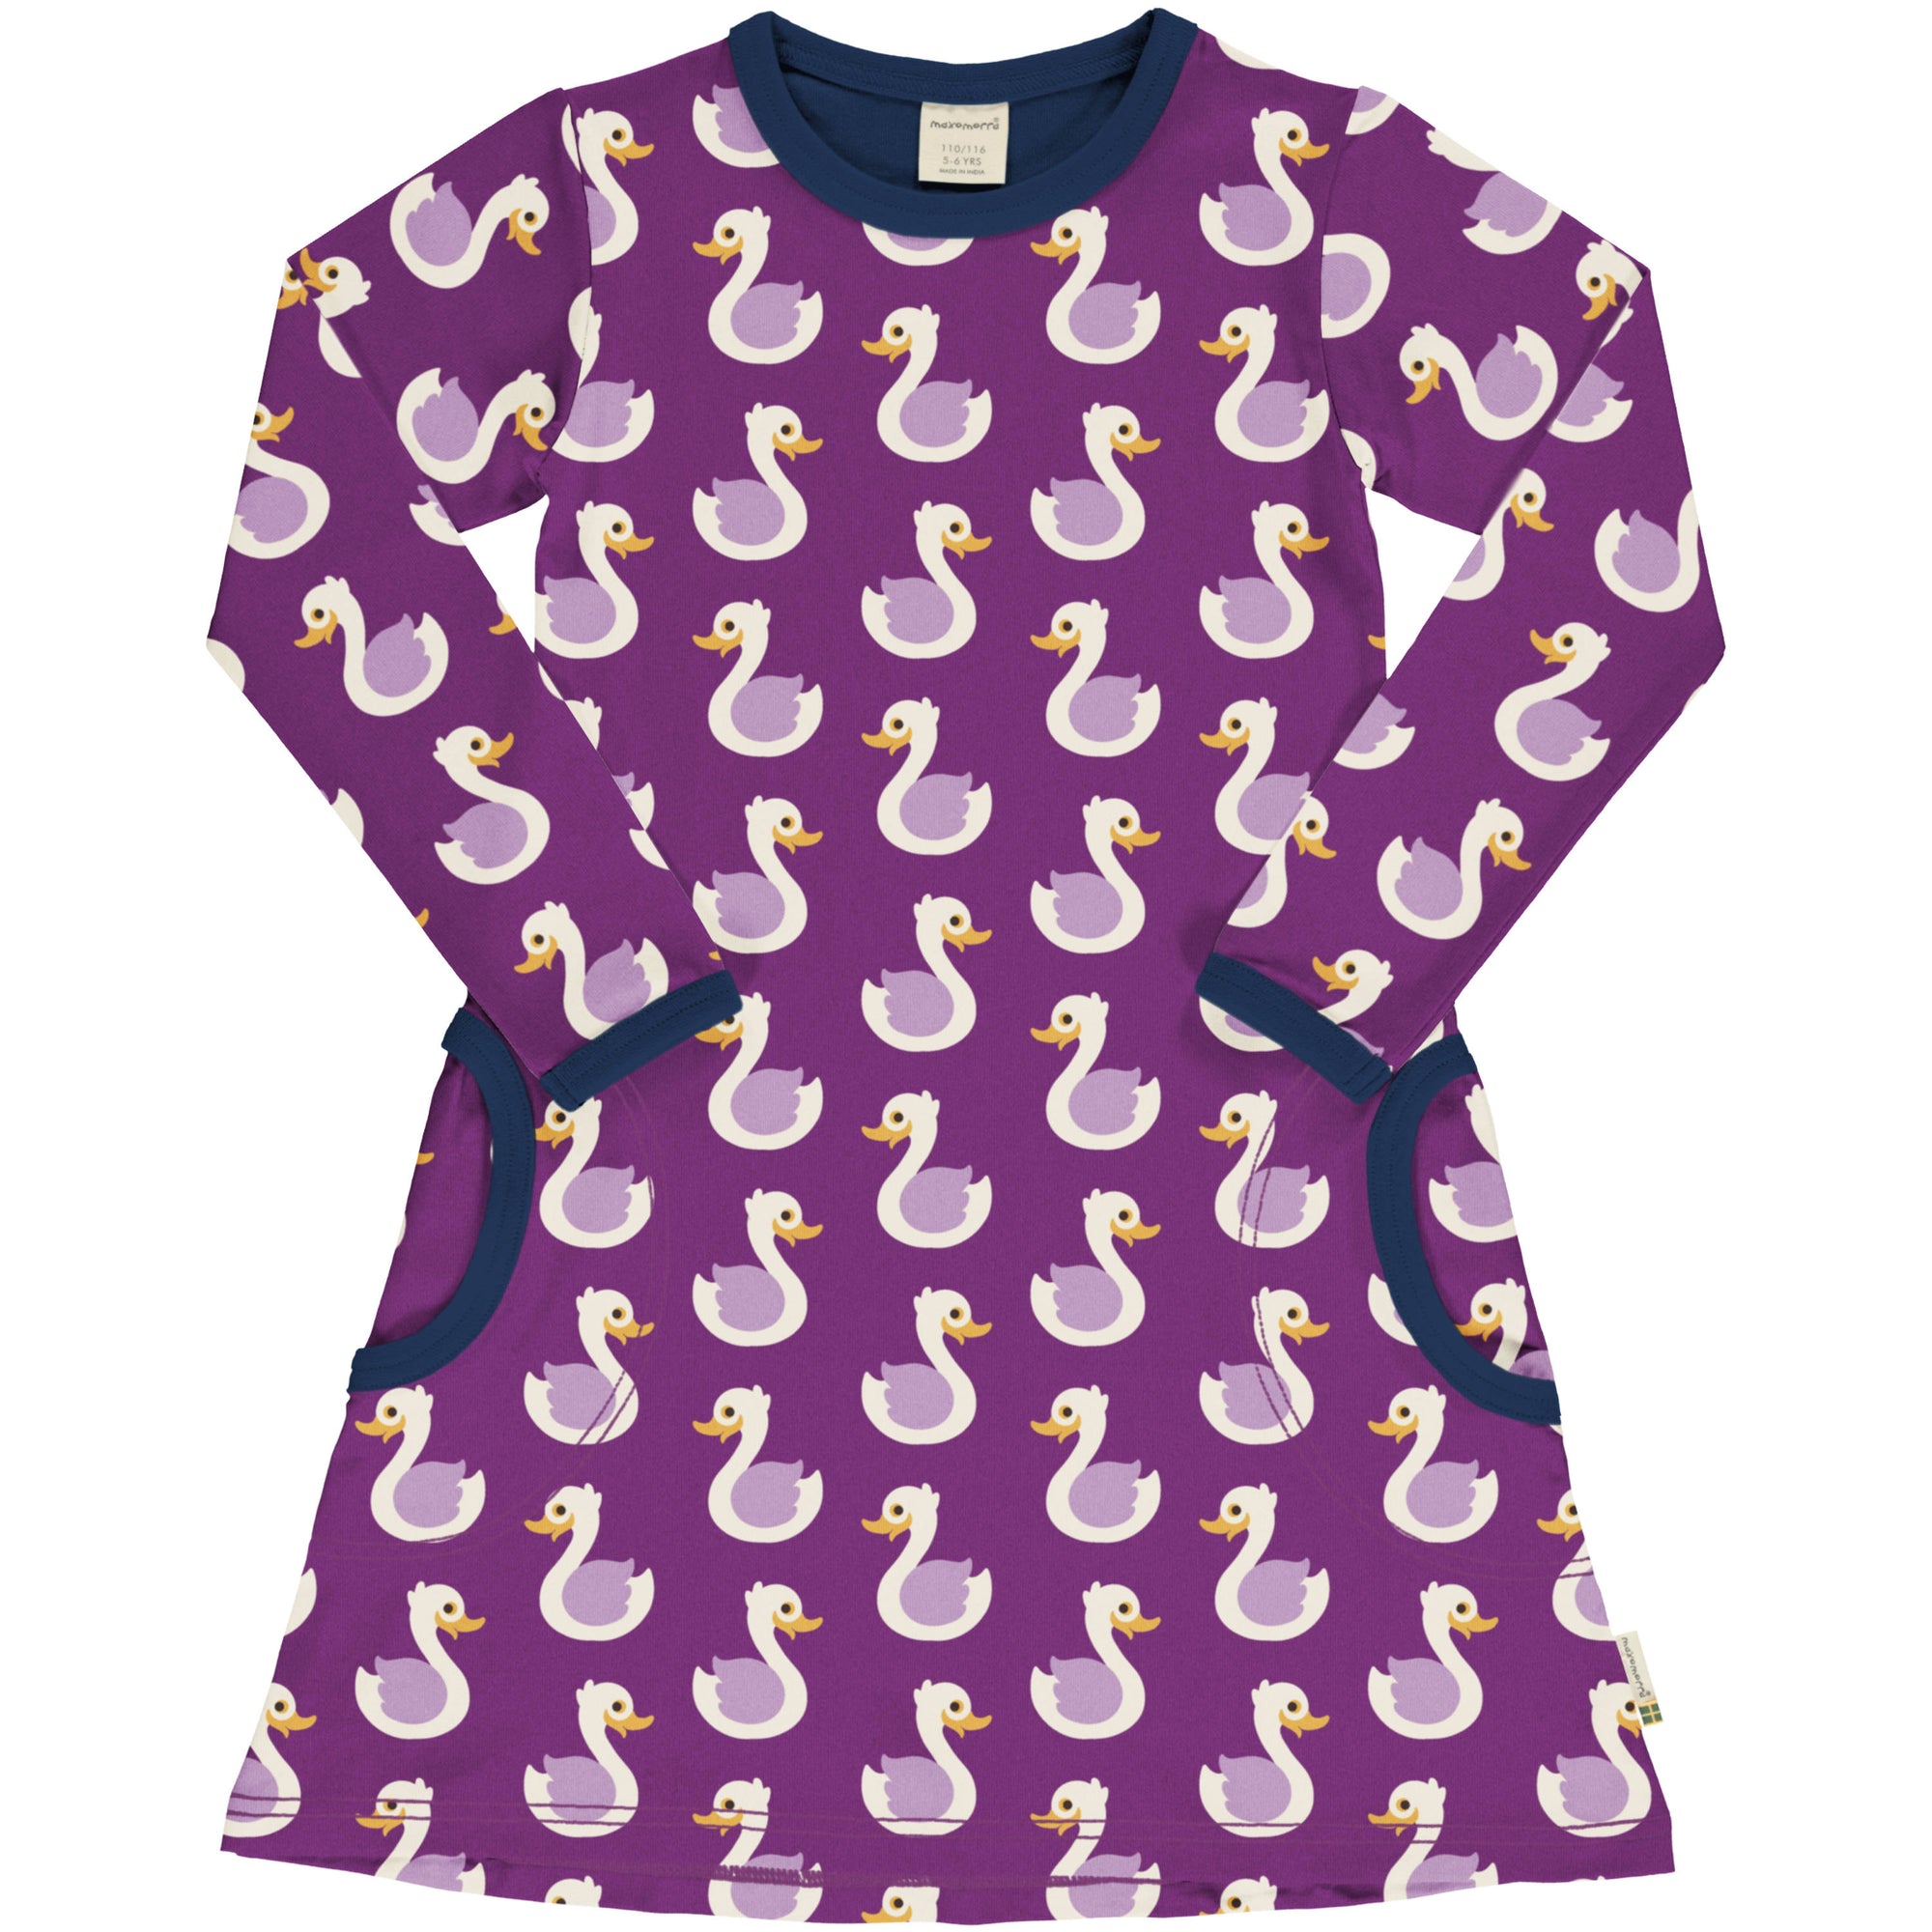 Maxomorra Swan Pocket Dress Dxa2307 Clothing 3-4YRS / Purple,5-6YRS / Purple,7-8YRS / Purple,9-10YRS / Purple,1-2 YRS / Purple